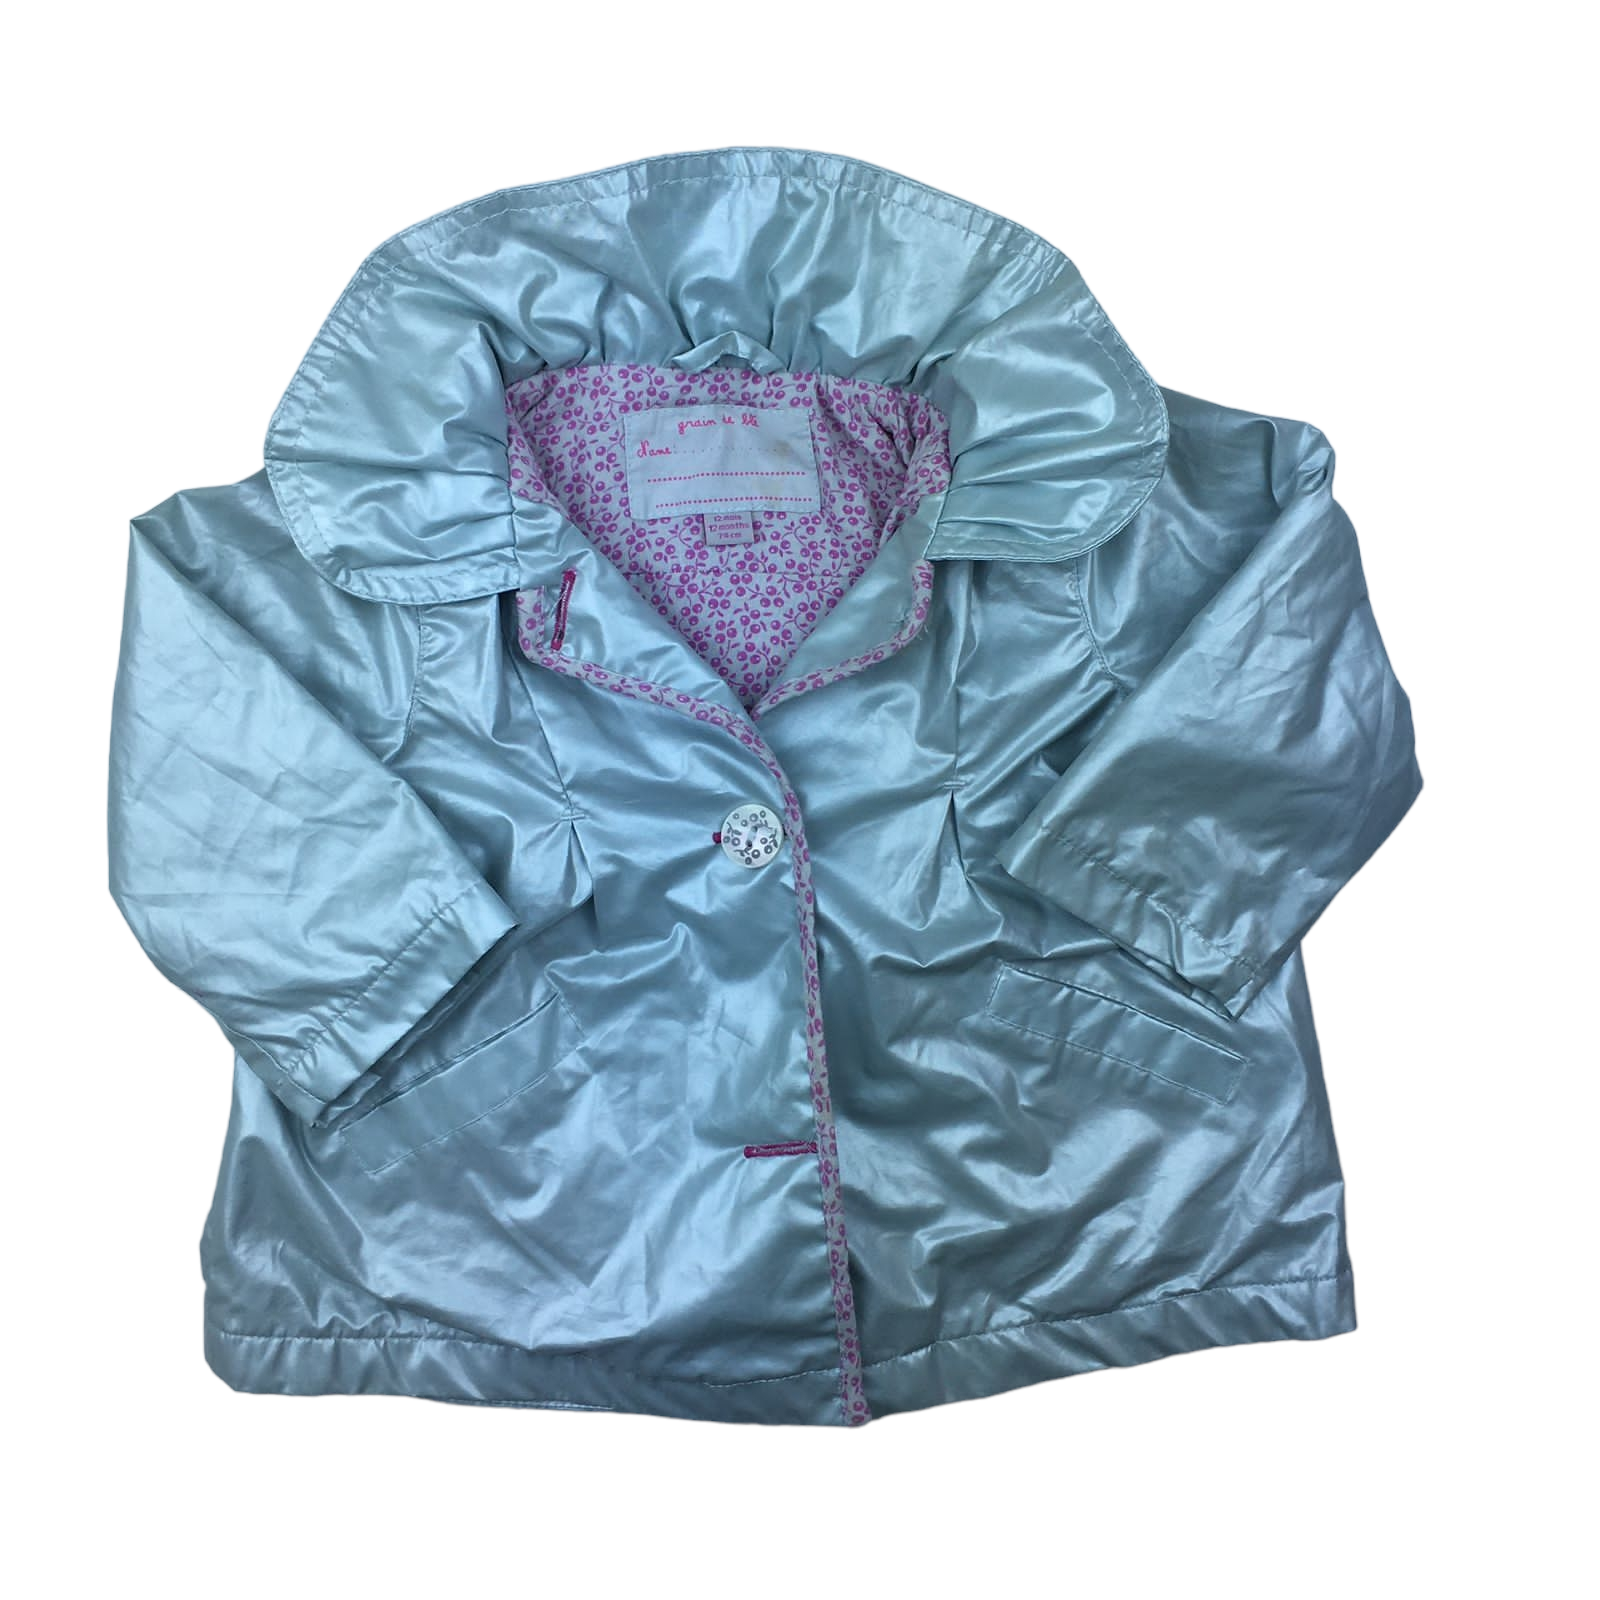 Abrigo gris metalizado con interior de algodon rosado